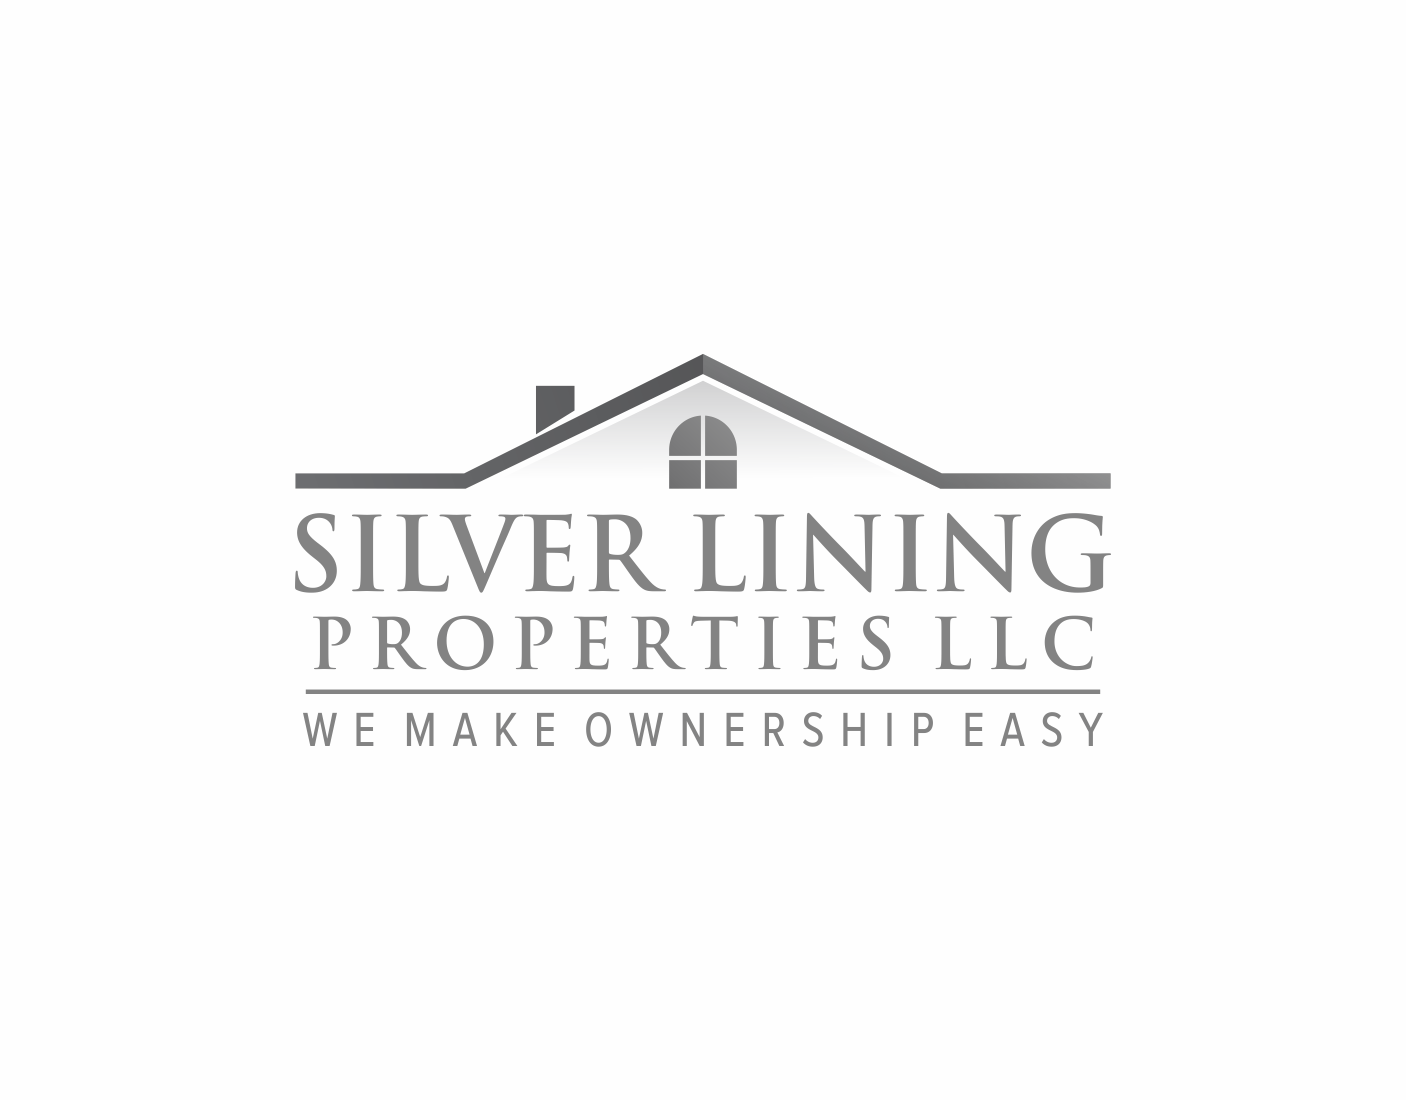 Lining Logo - Logo Design. 'Silver Lining Properties LLC' design project